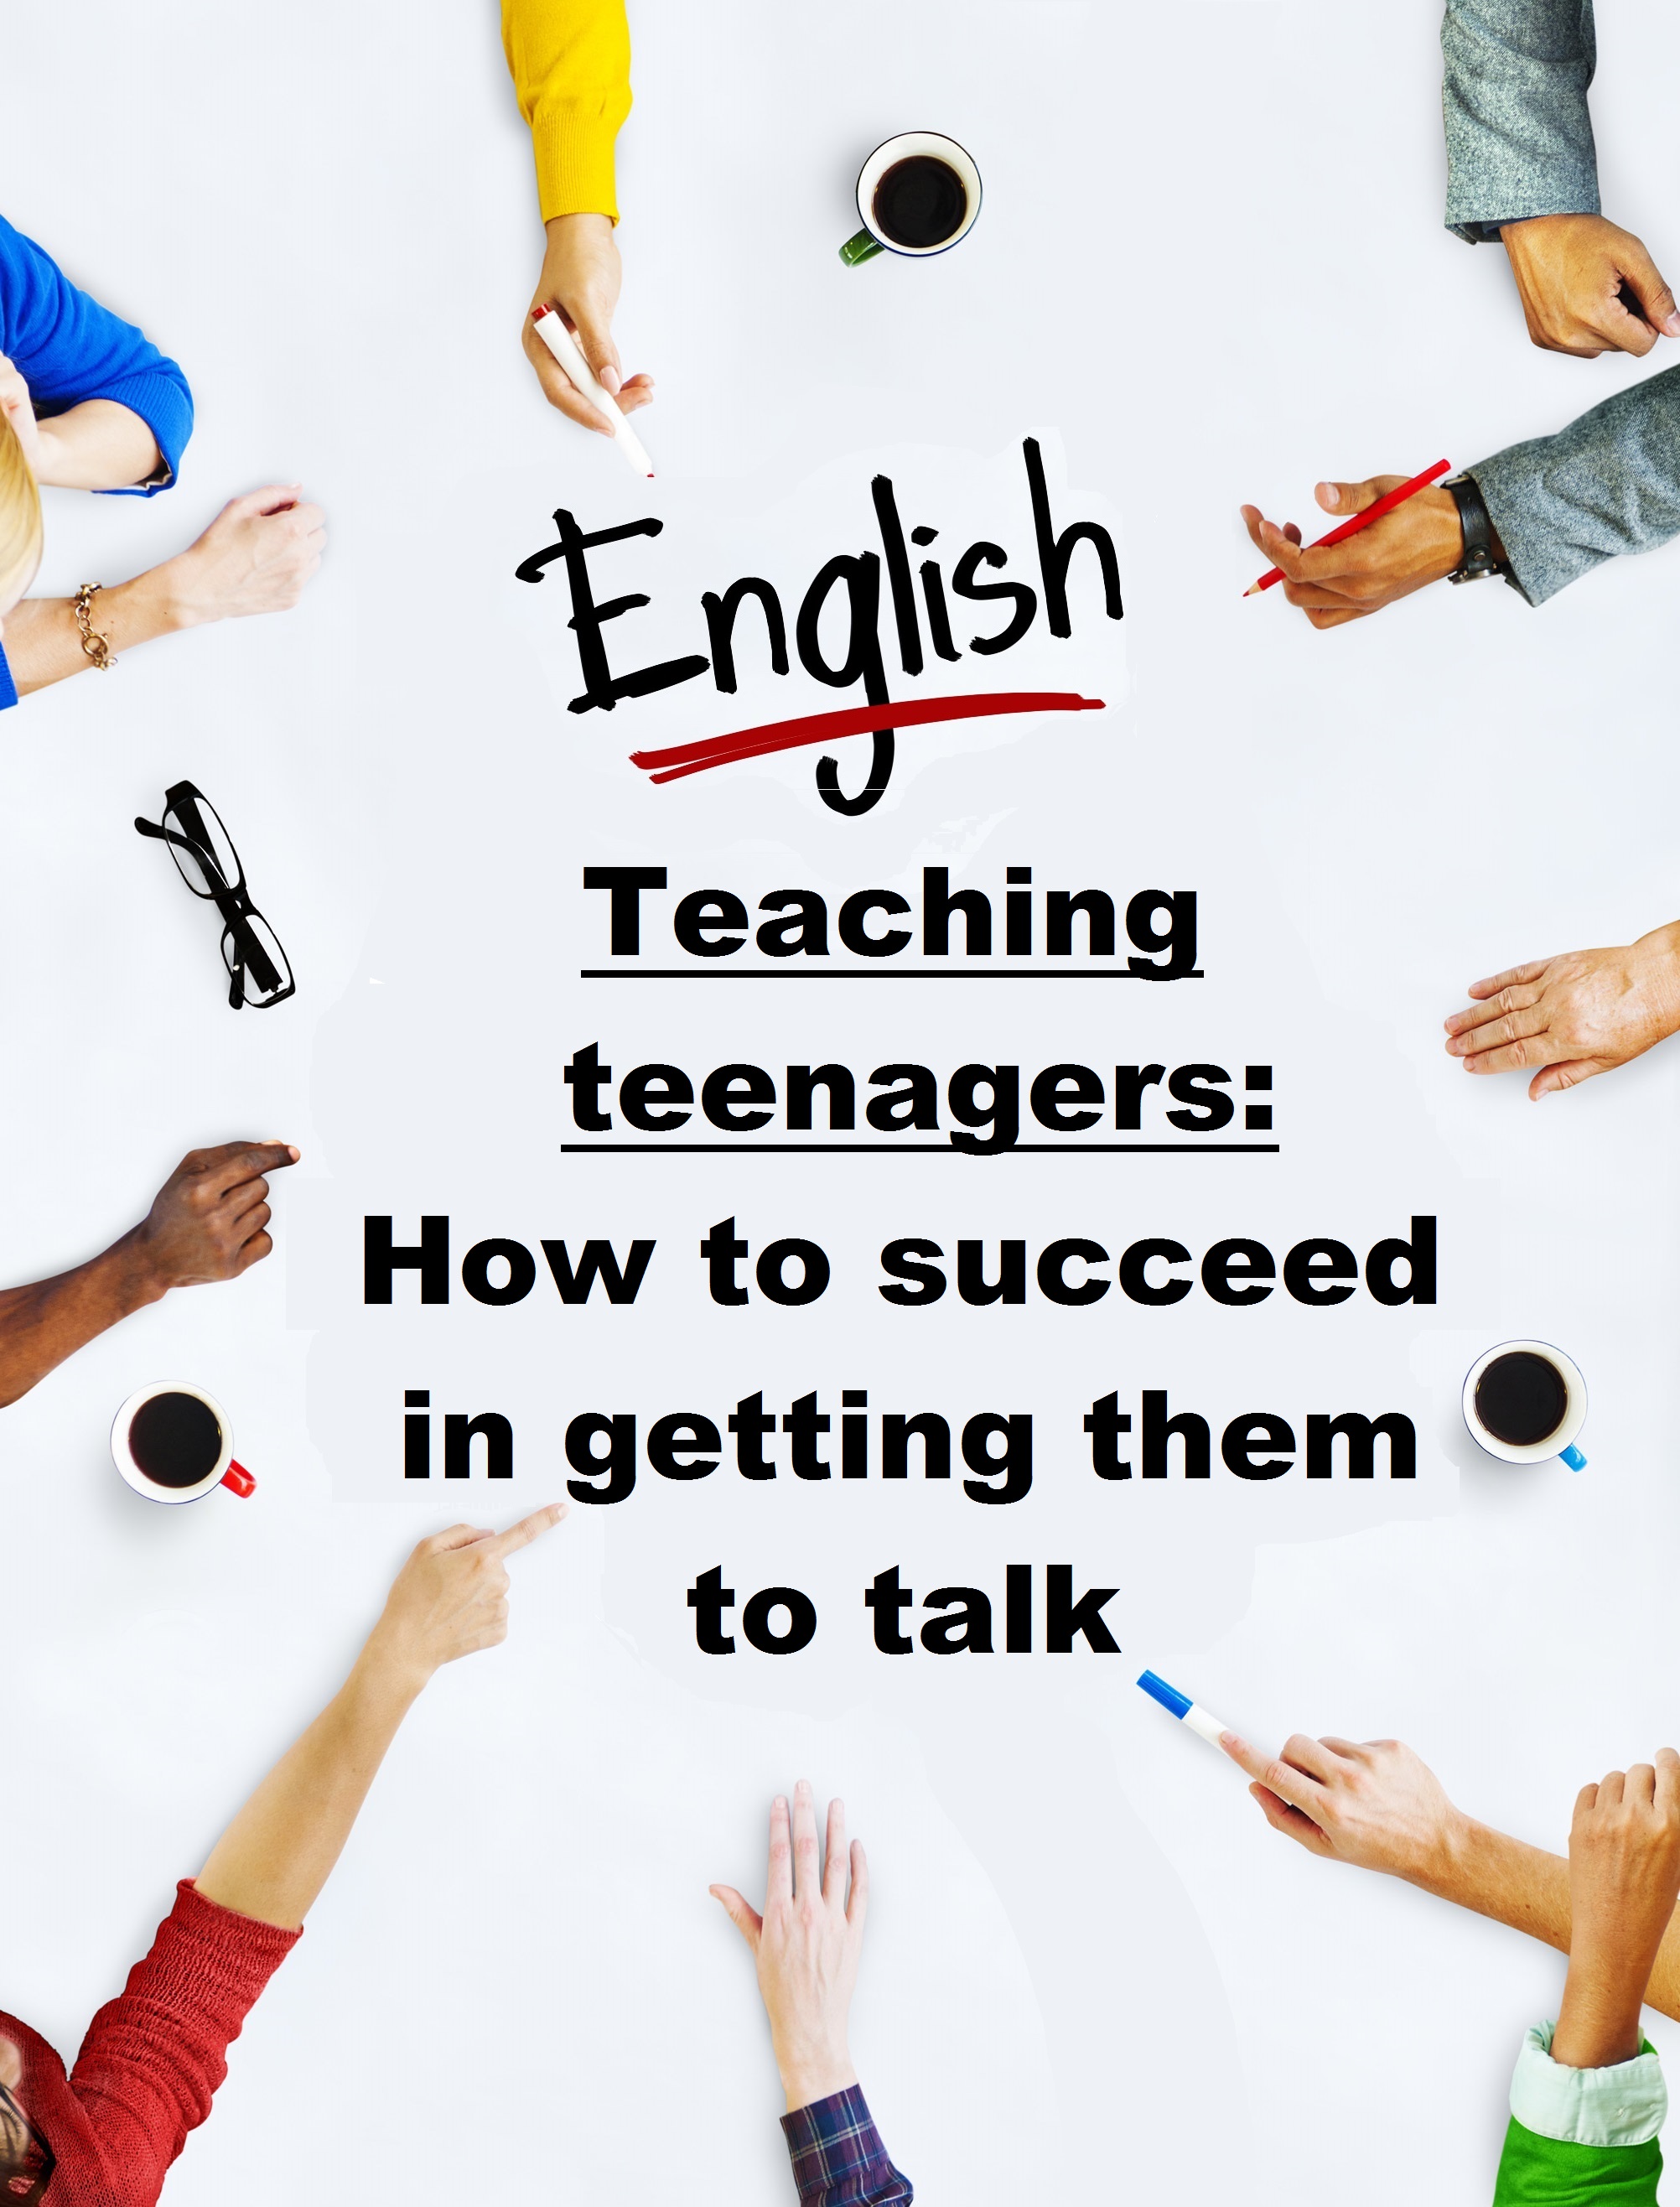 Запись вебинара "Teaching teenagers: How to succeed in getting them to talk"